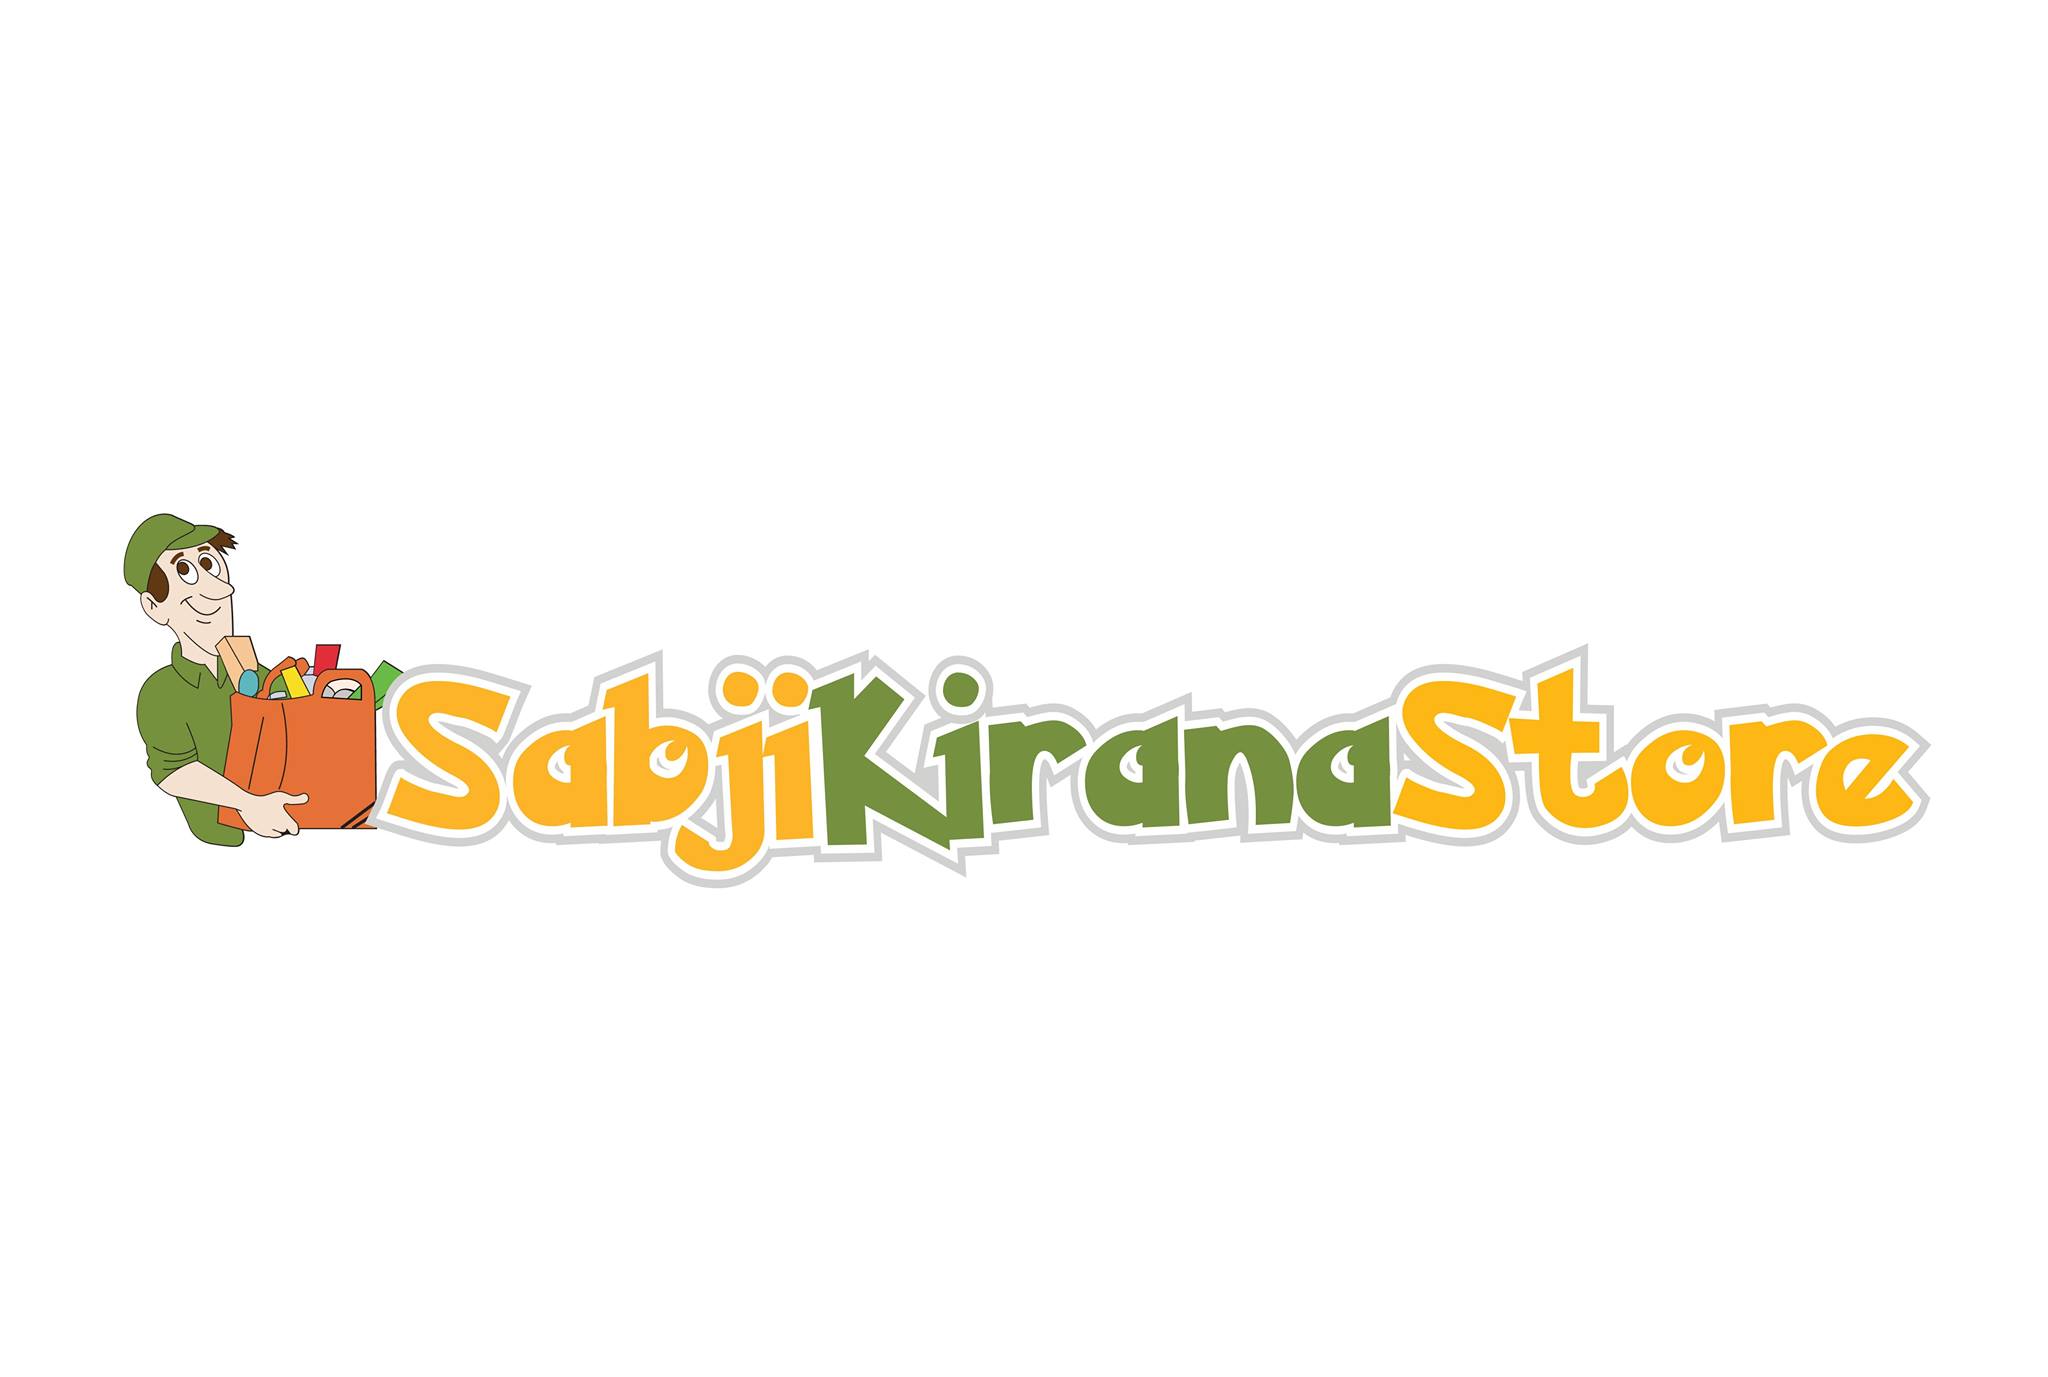 Sabji Kirana Store